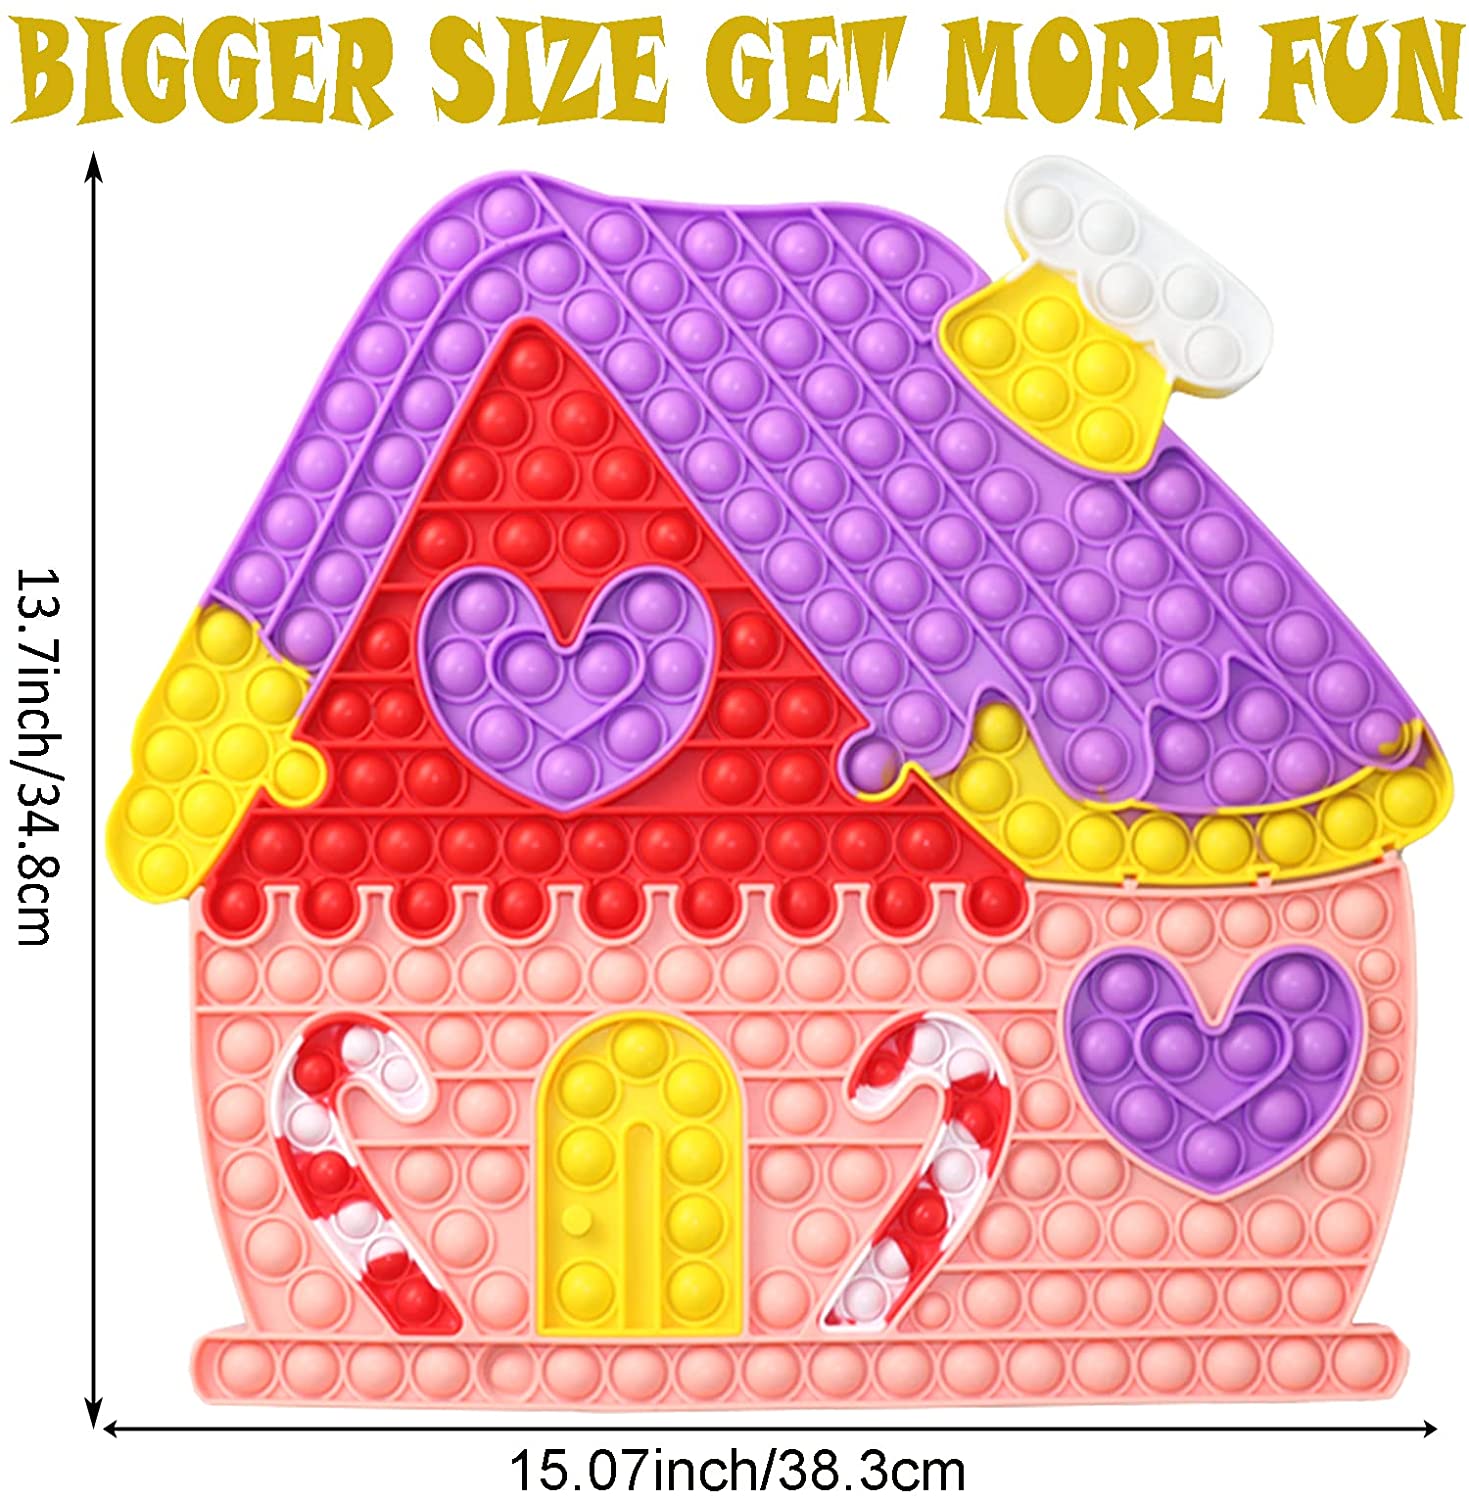 Big Christmas House Huge Fidget Toys Jumbo Jigsaw Puzzle Game Push Large Fidget Sensory Toys Giant 2 - Simple Dimple Fidget